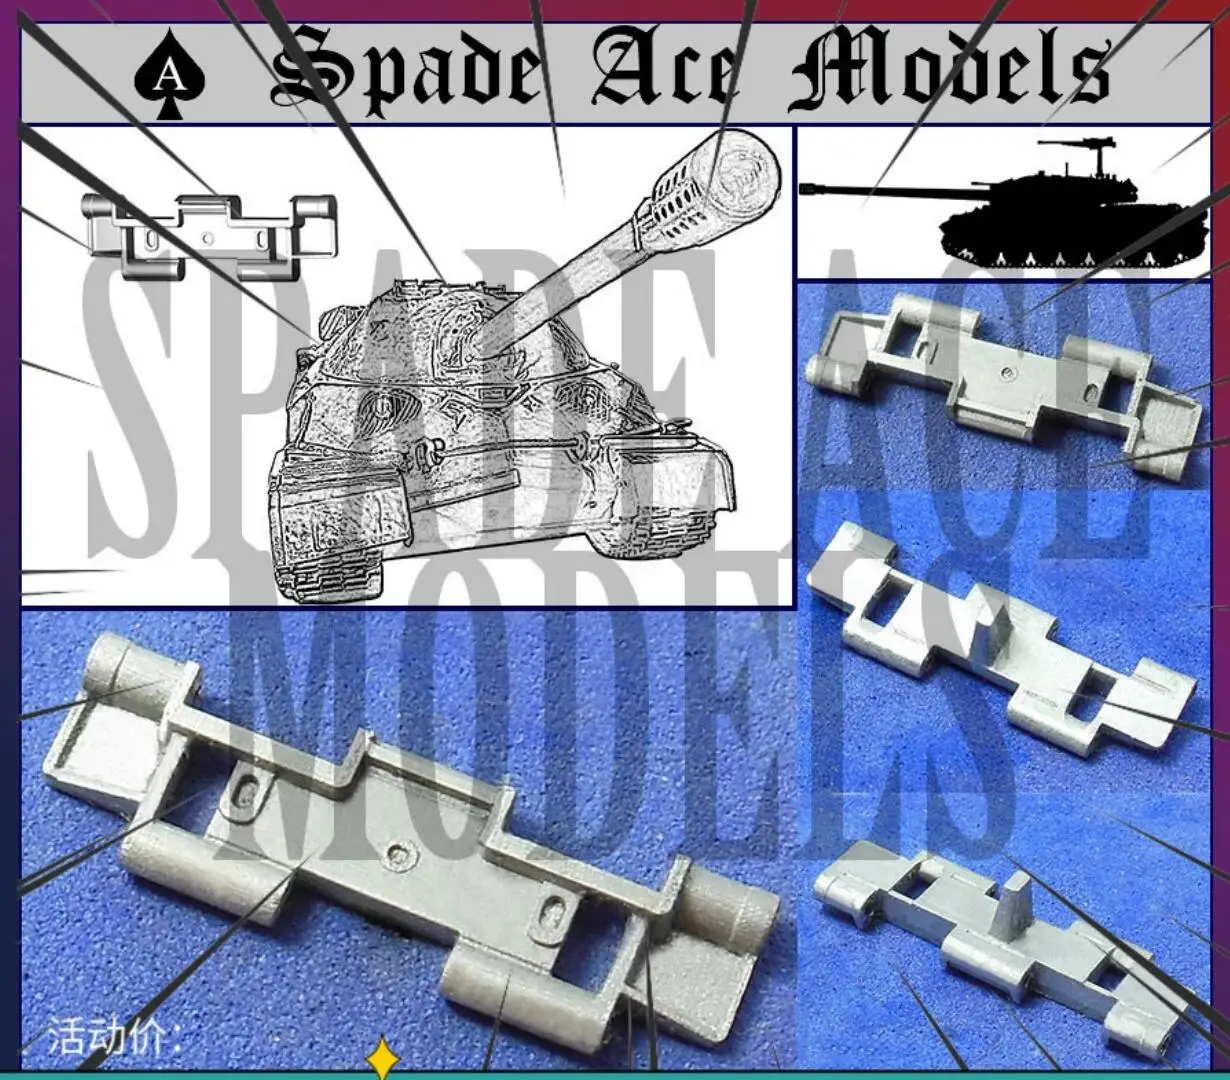 

Spade Ace Models SAT-35224 1/35 Scale Metal Track For Trumpeter 05586 Soviet JS-7 Heavy Tank